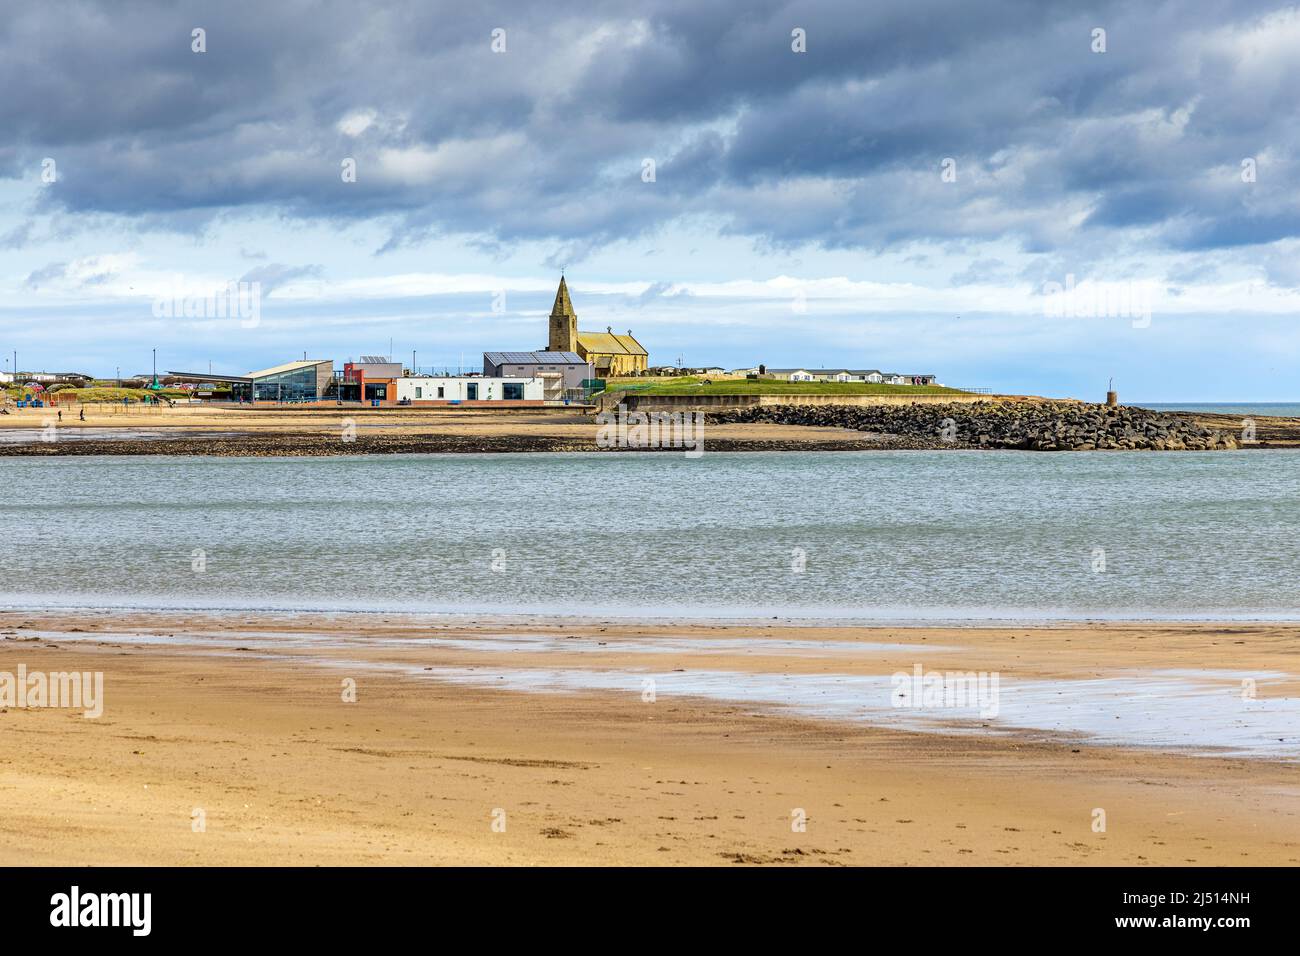 The Beach and Bay at Newbiggin-by-the-Sea, Northumberland. Stock Photo